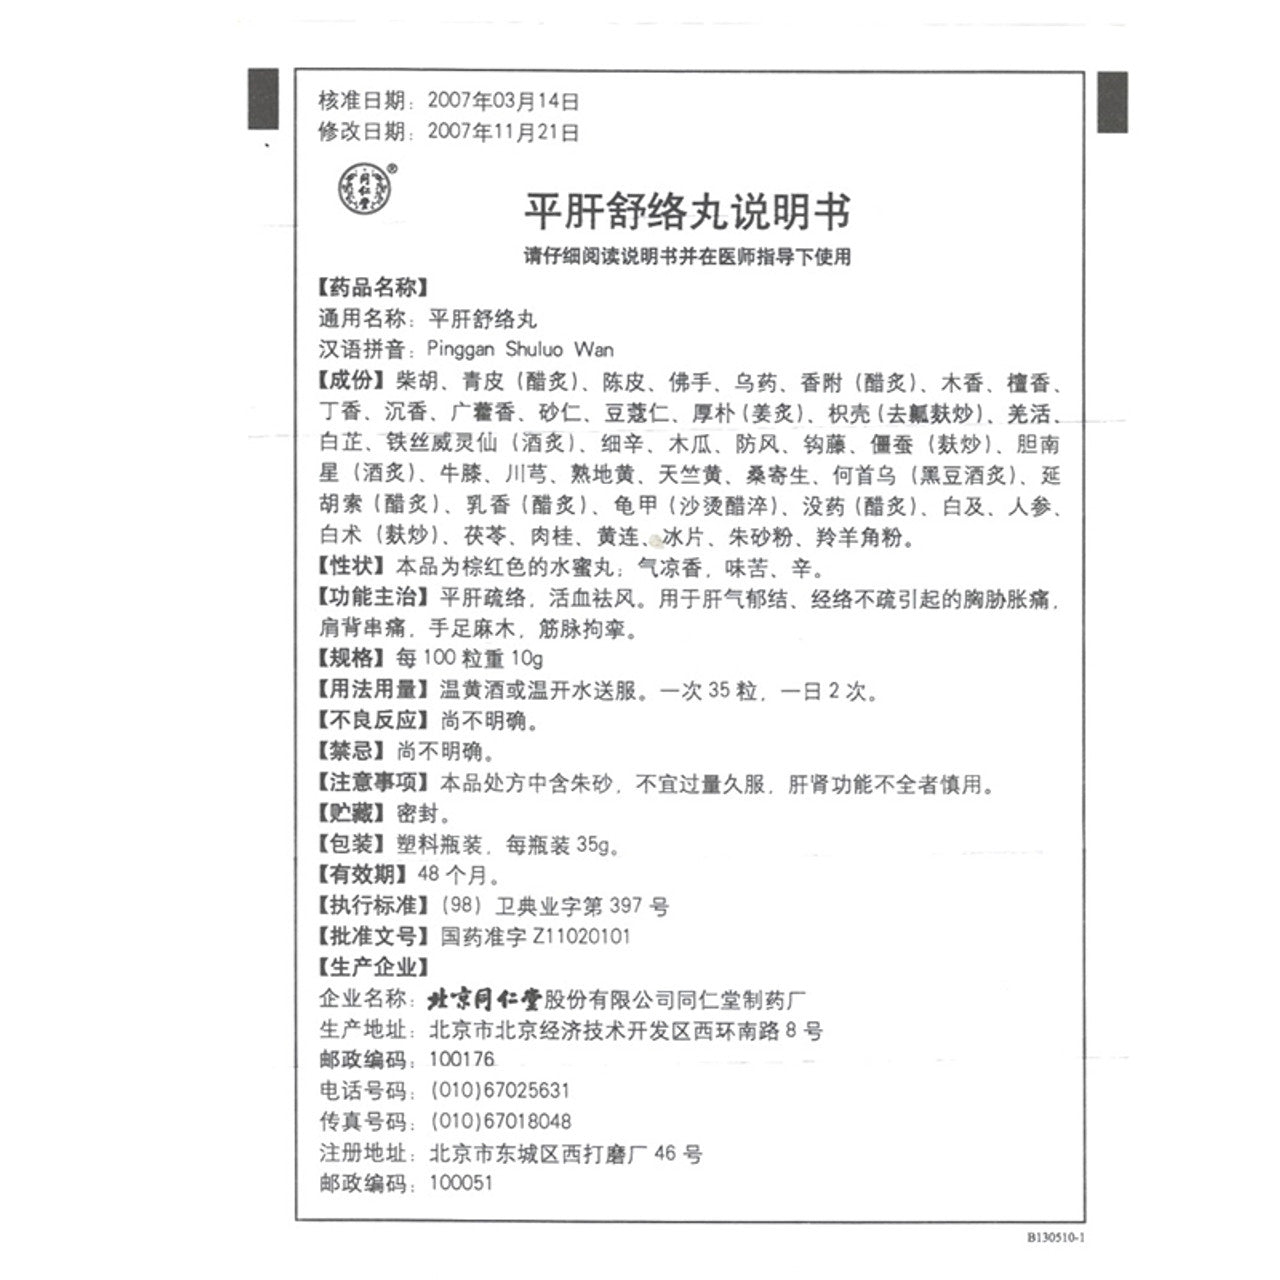 (35g*5 boxes/lot). Pinggan Shuluo Wan or Pinggan Shuluo Pills or Ping Gan Shu Luo Wan for Rheumatism Rheumatoid